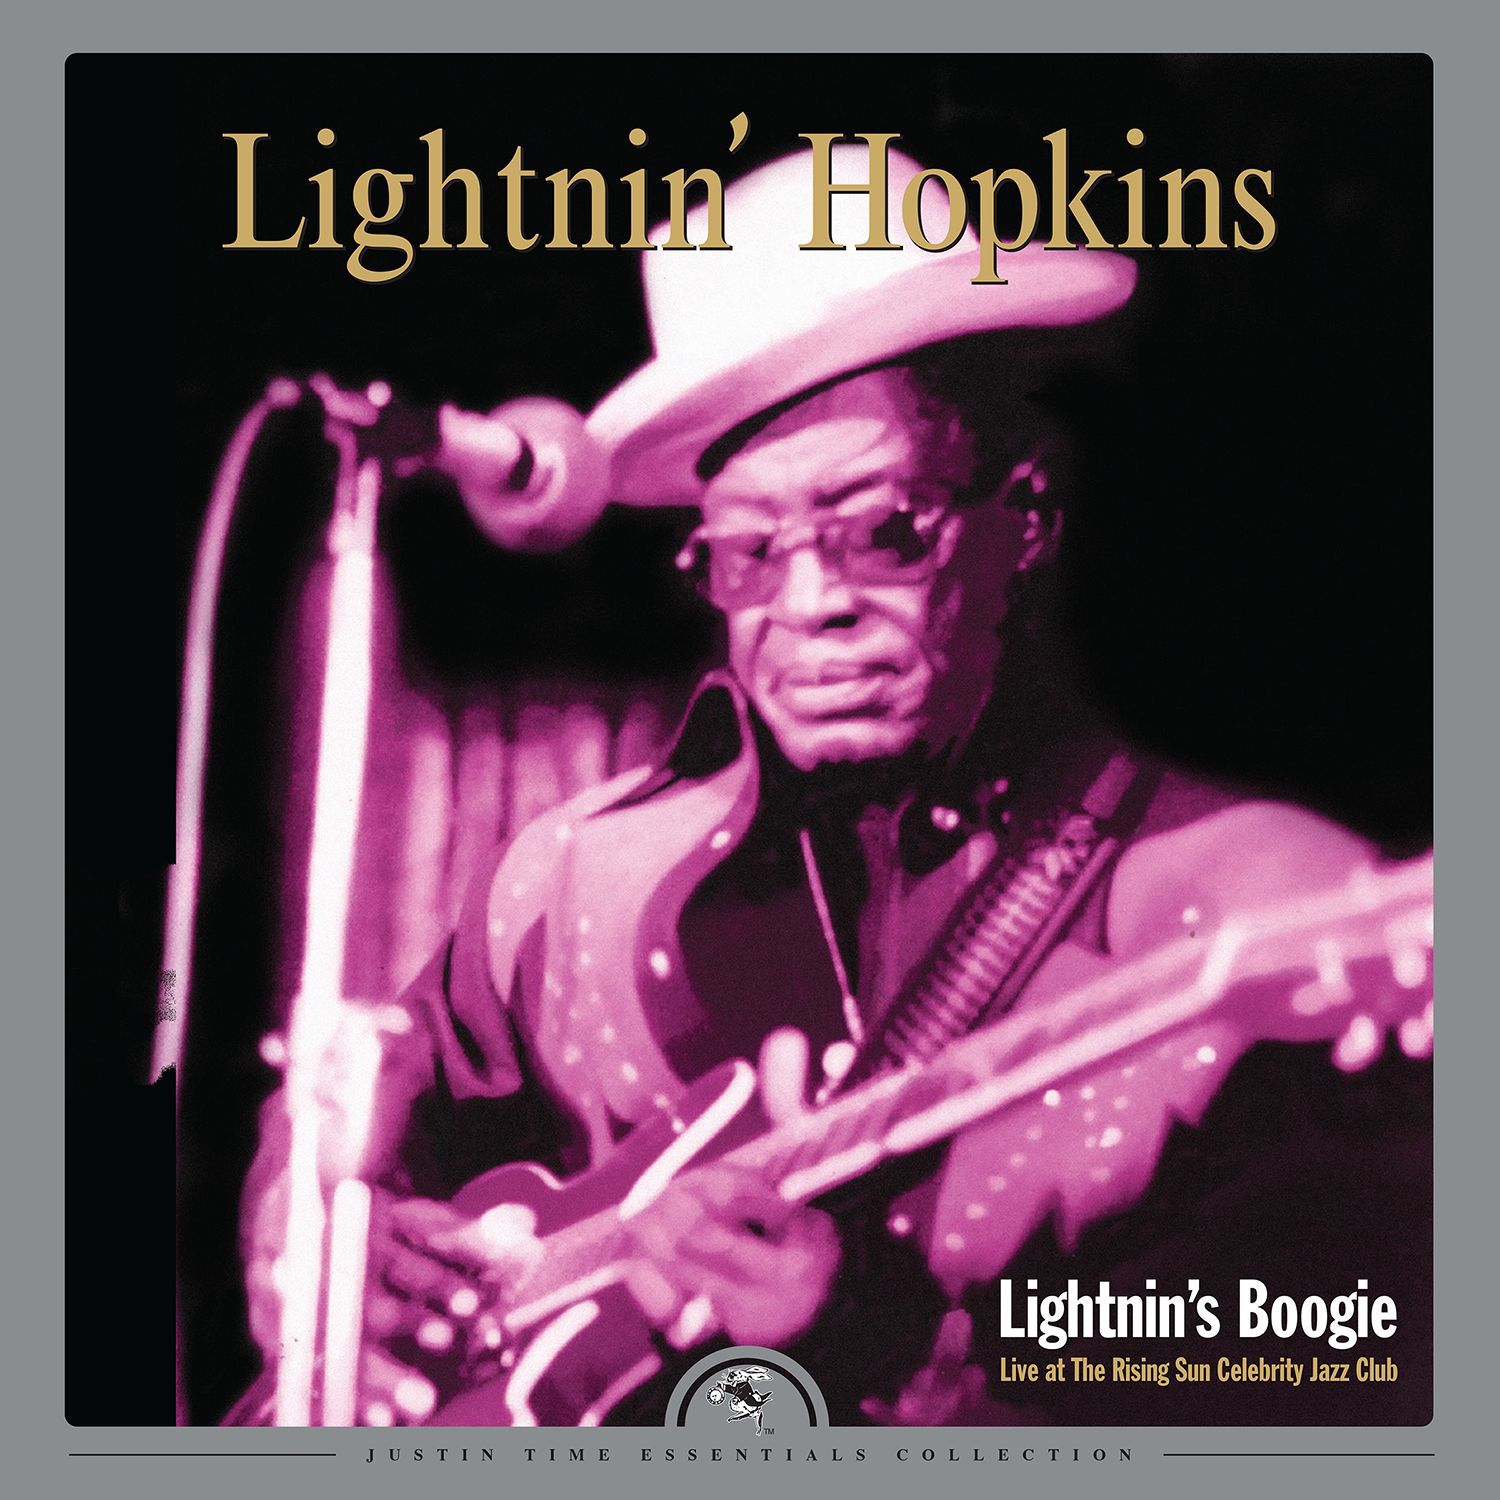 Lightnin’ Hopkins – Lightnin’s Boogie: Live at The Rising Sun Celebrity Jazz Club (Remastered) (2016) [FLAC 24bit/44,1kHz]